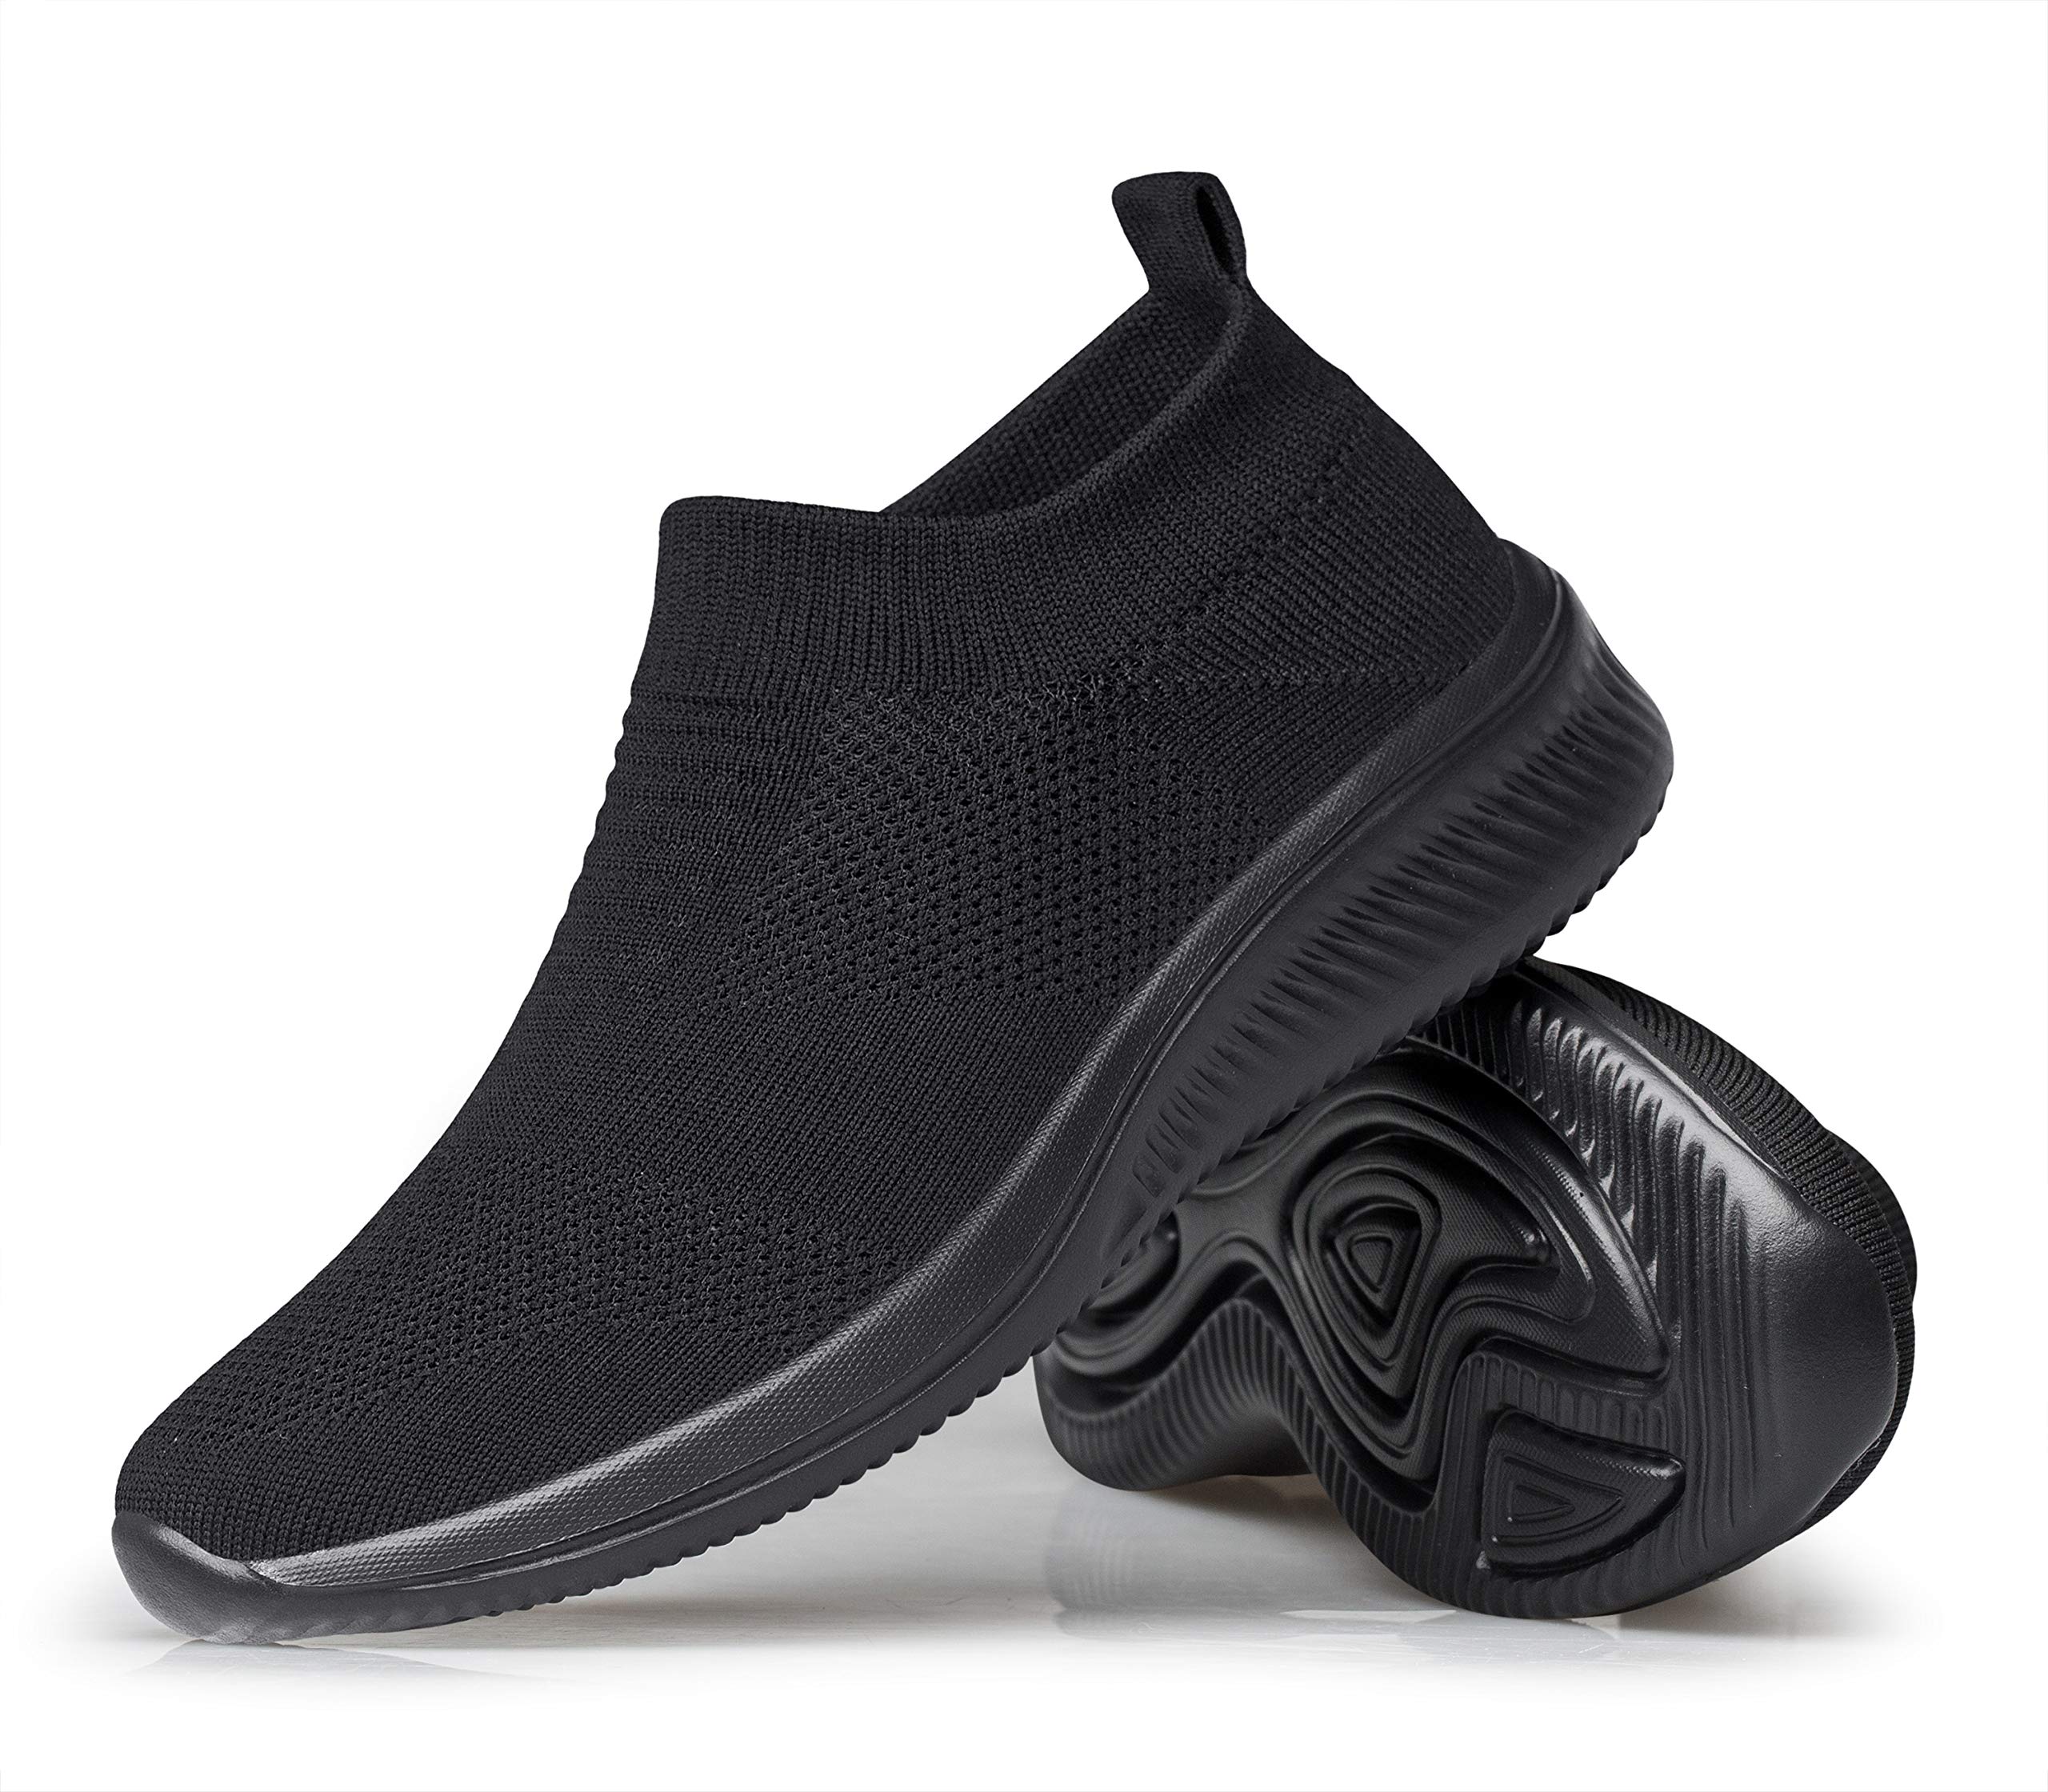 Vidbiv Men Slip on Casual Trainers Walking Shoes - Breathable Slip-on Lightweight Comfortable Tennis Mesh Sneaker